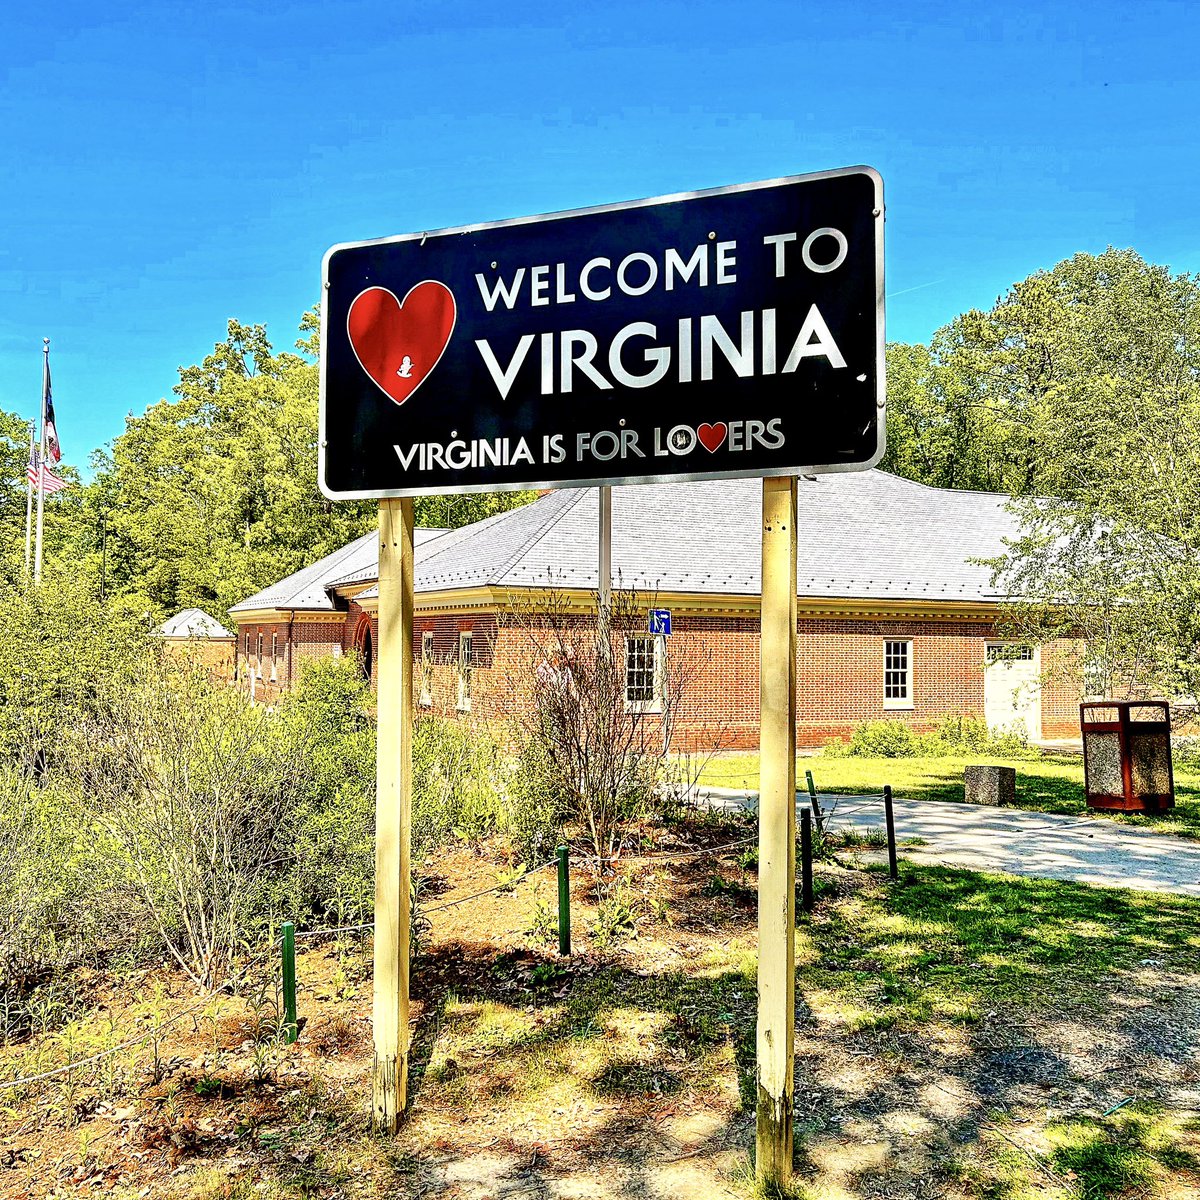 Virginia Is For Lovers…
#explore #travel #ontheroadagain #mondayvibes #travelblogger #travelphotography #backonthegrind #roadtrip #workflow #virginiaisforlovers #virginia